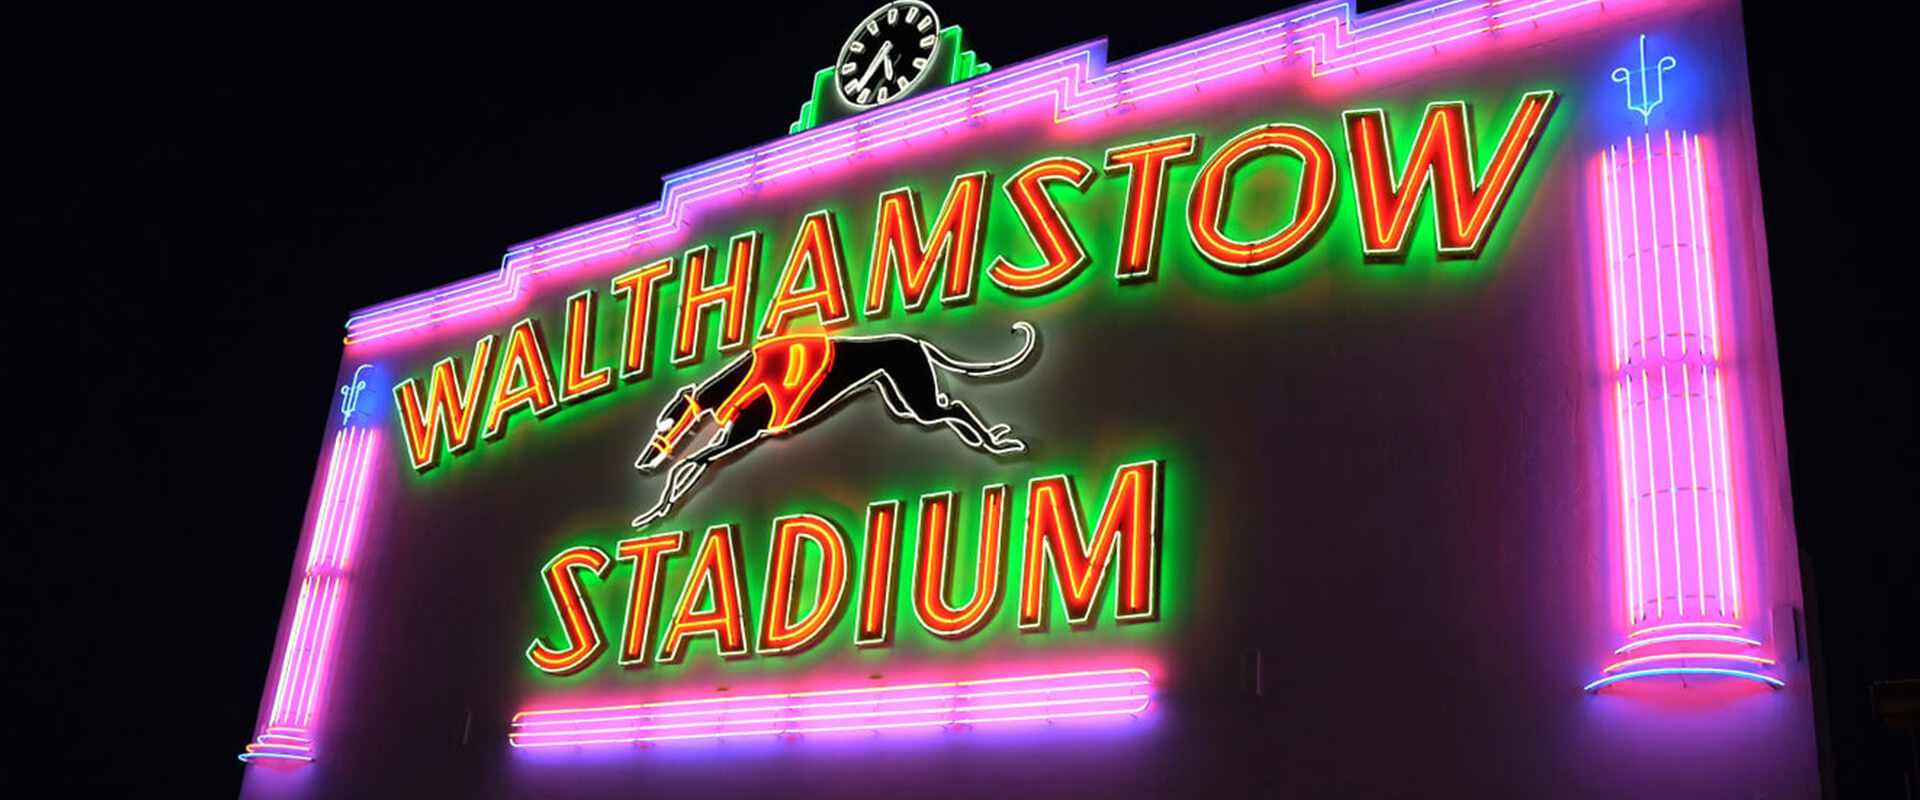 Walthamstow stadium sign at night